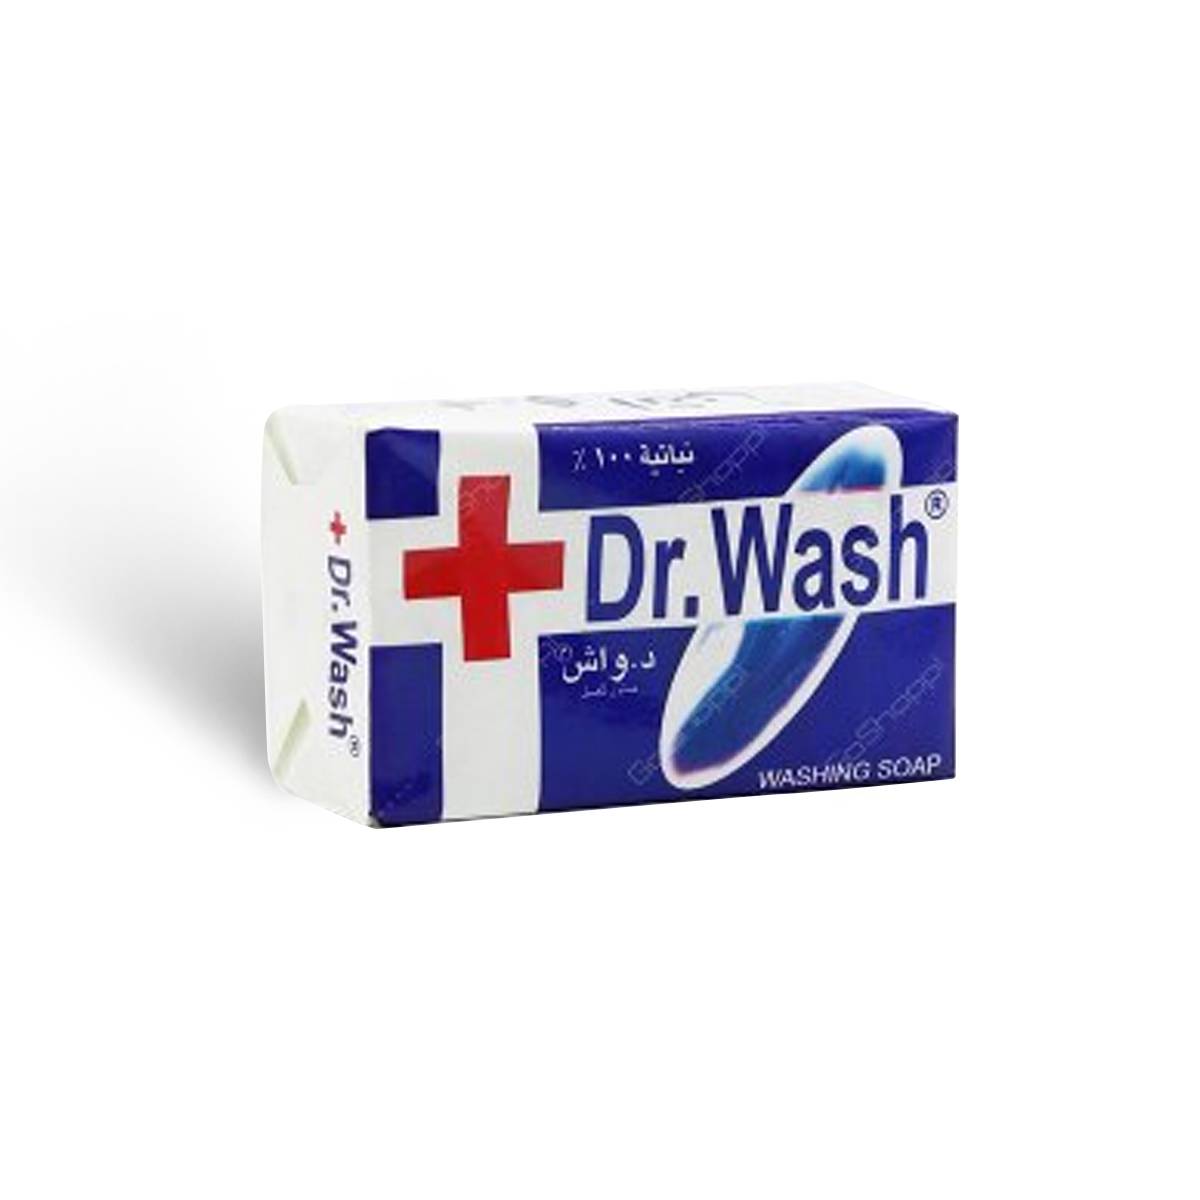 Dr Wash Washing Soap 200g